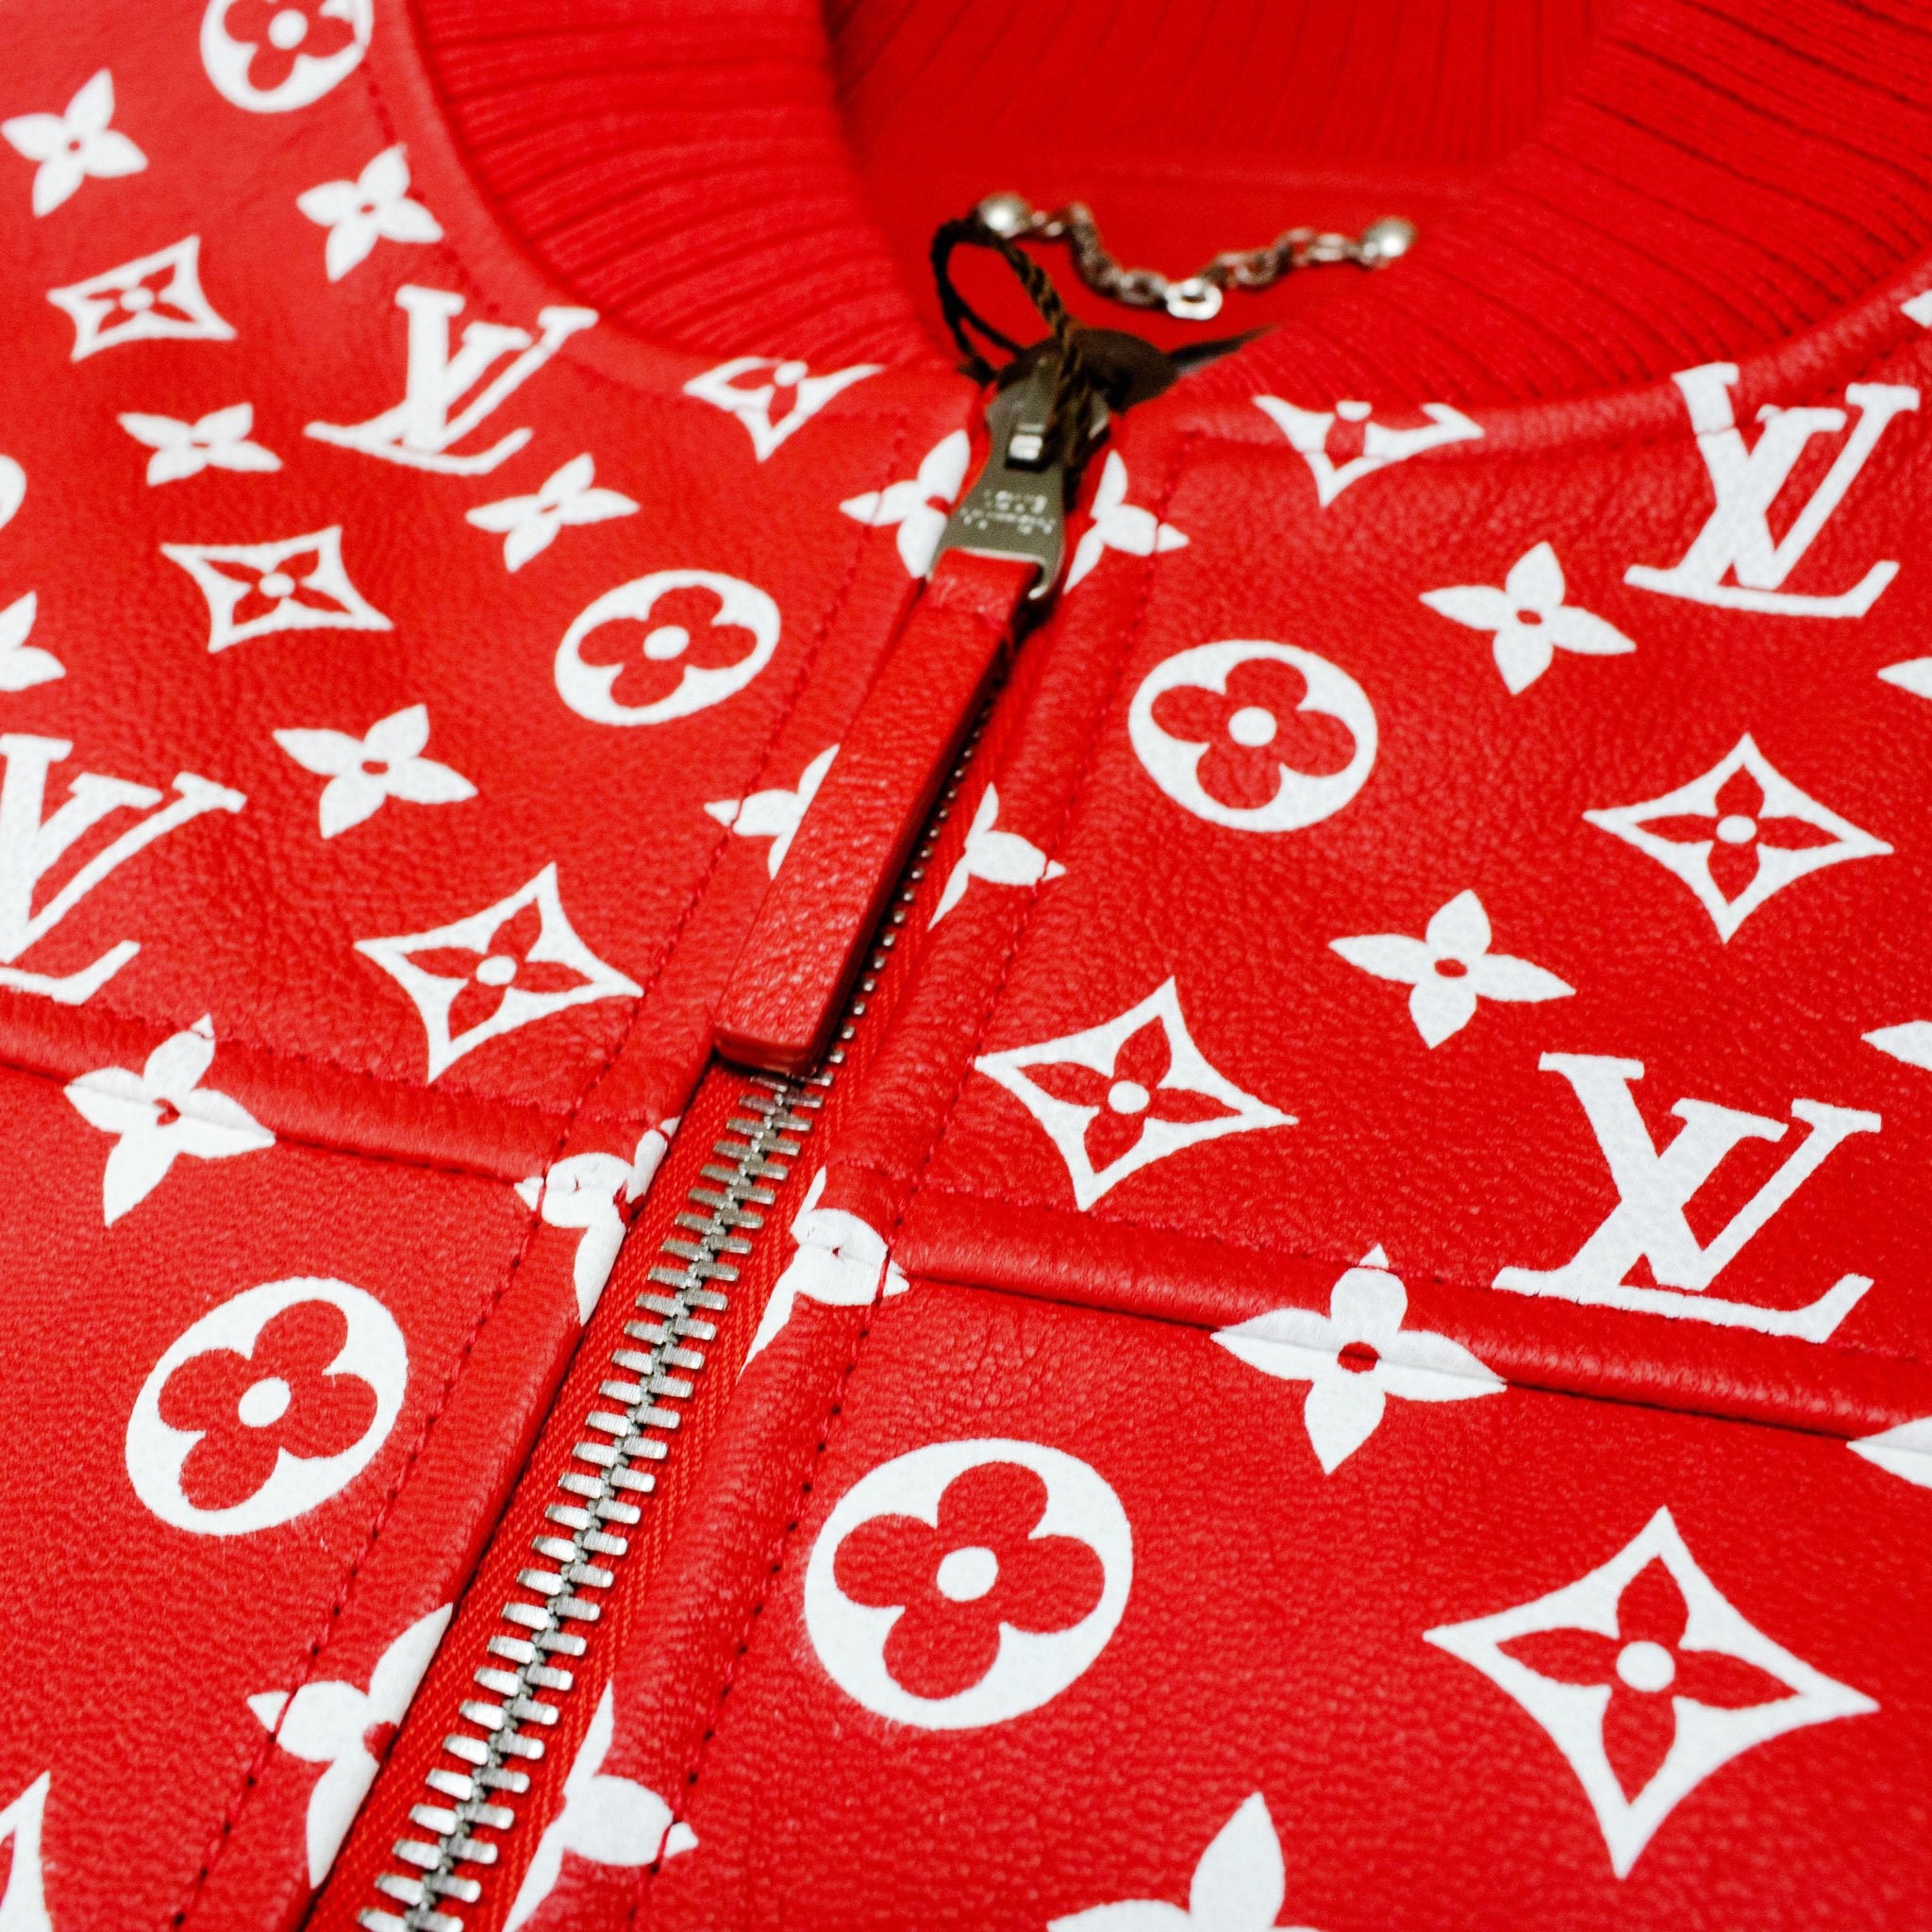 Supreme x Louis Vuitton Leather Blouson Red Monogram Jacket – Cheap 127-0  Jordan outlet